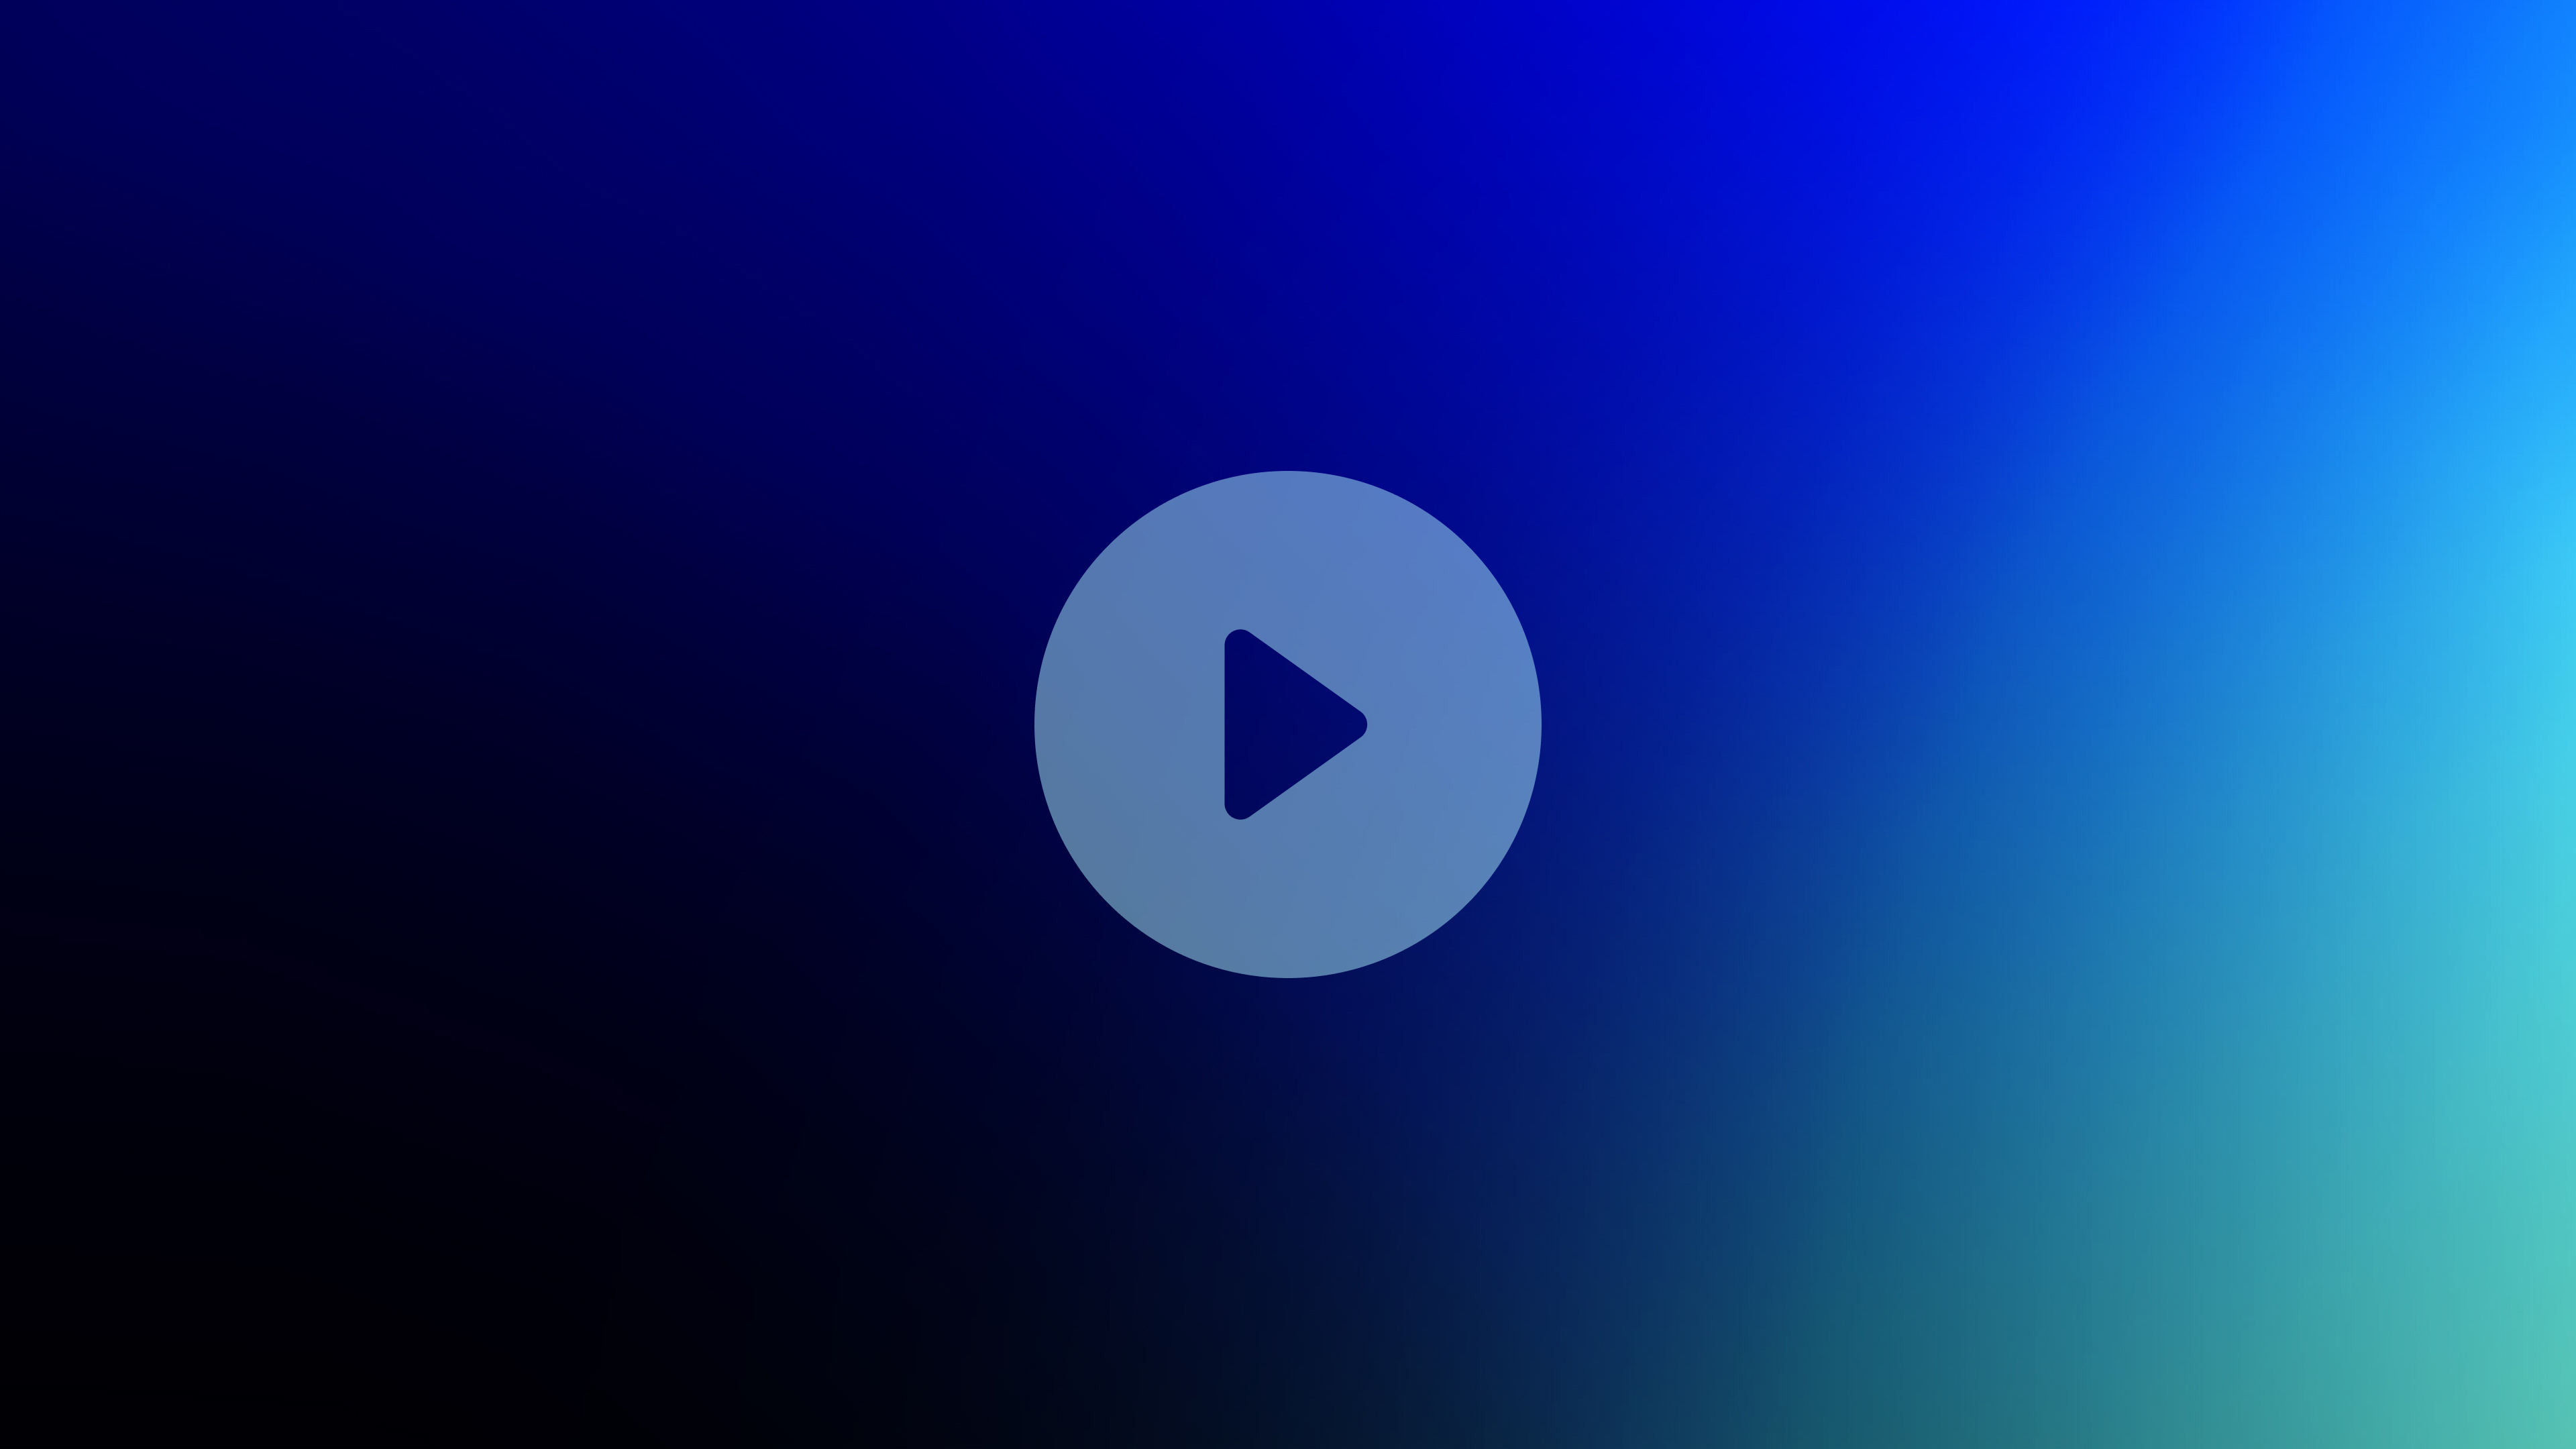 Video play button on an aurora background.